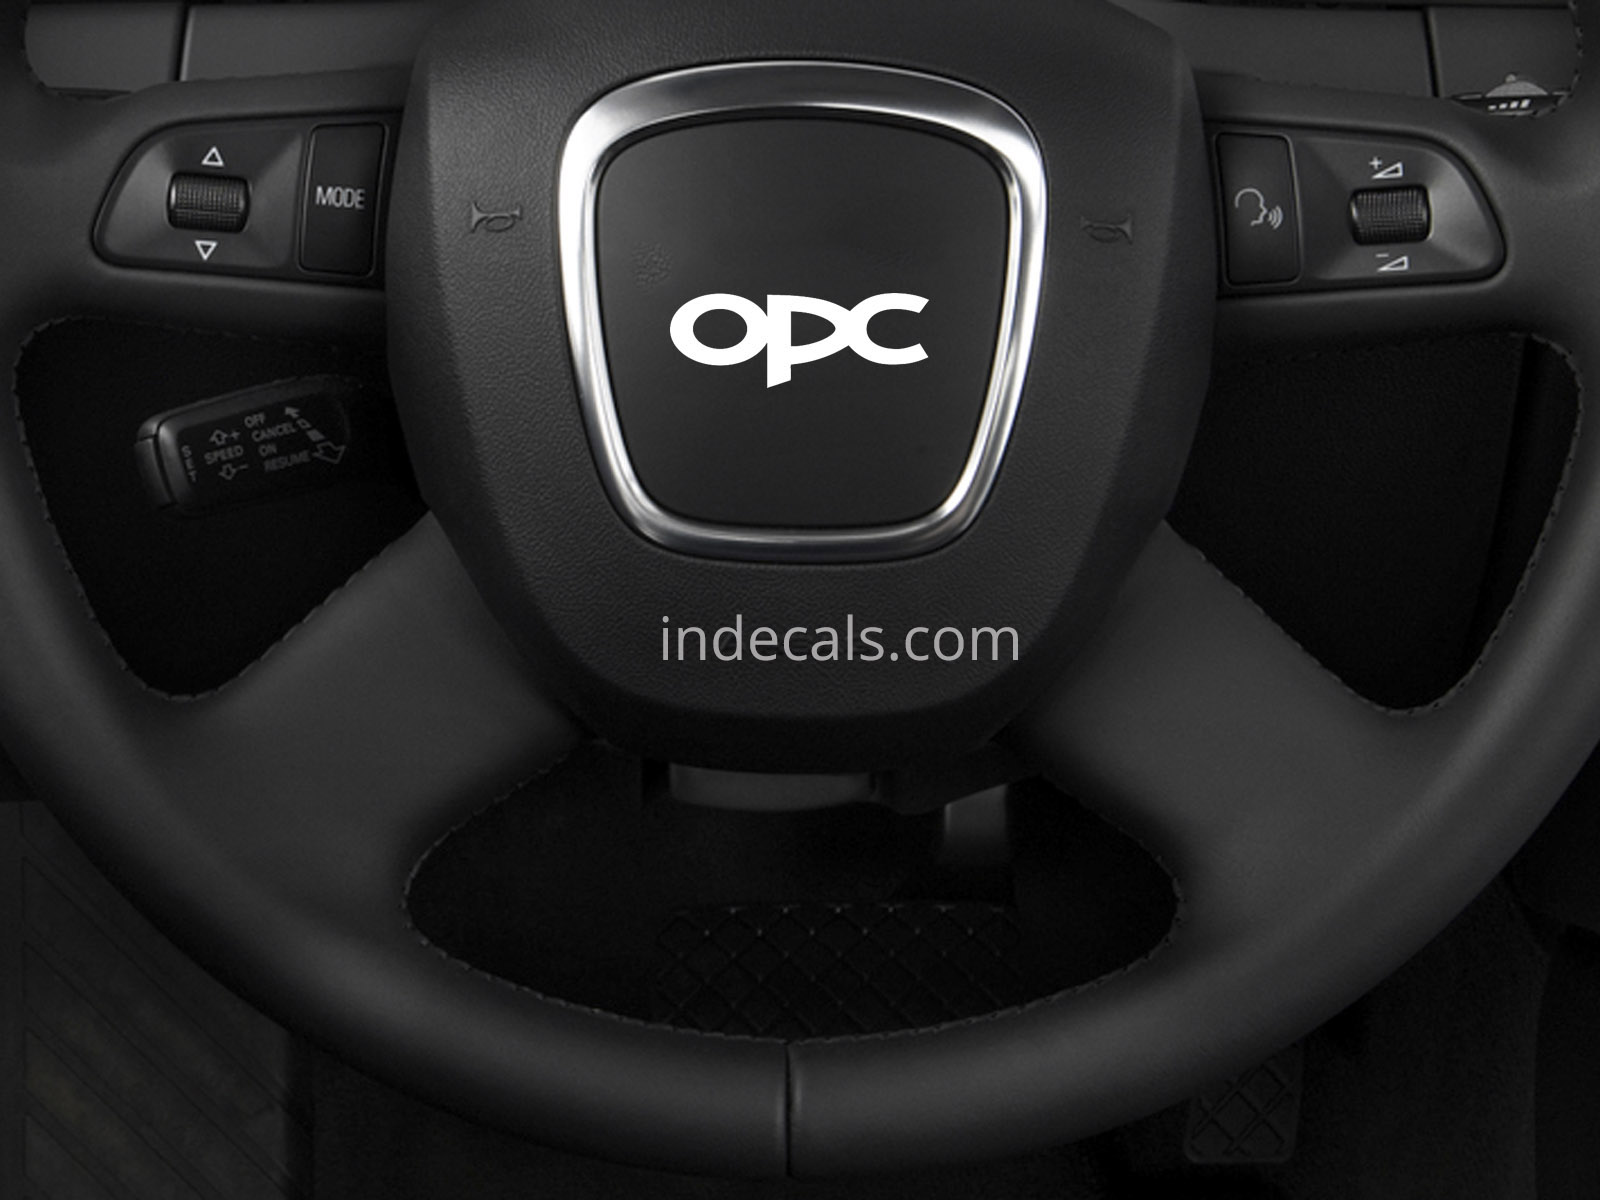 3 x Opel OPC Stickers for Steering Wheel - White